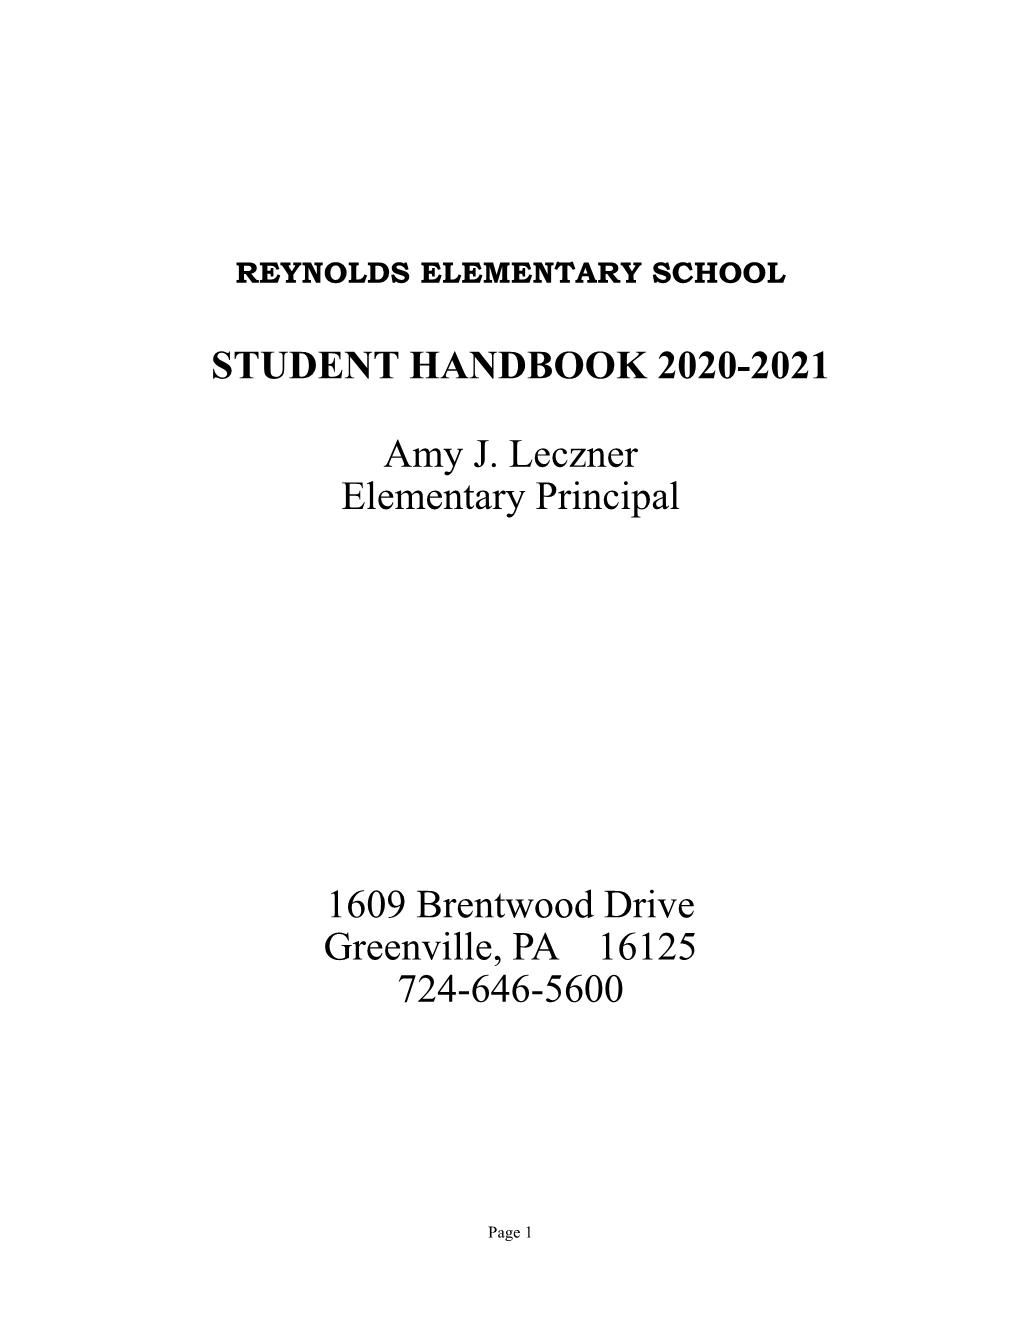 STUDENT HANDBOOK 2020-2021 Amy J. Leczner Elementary